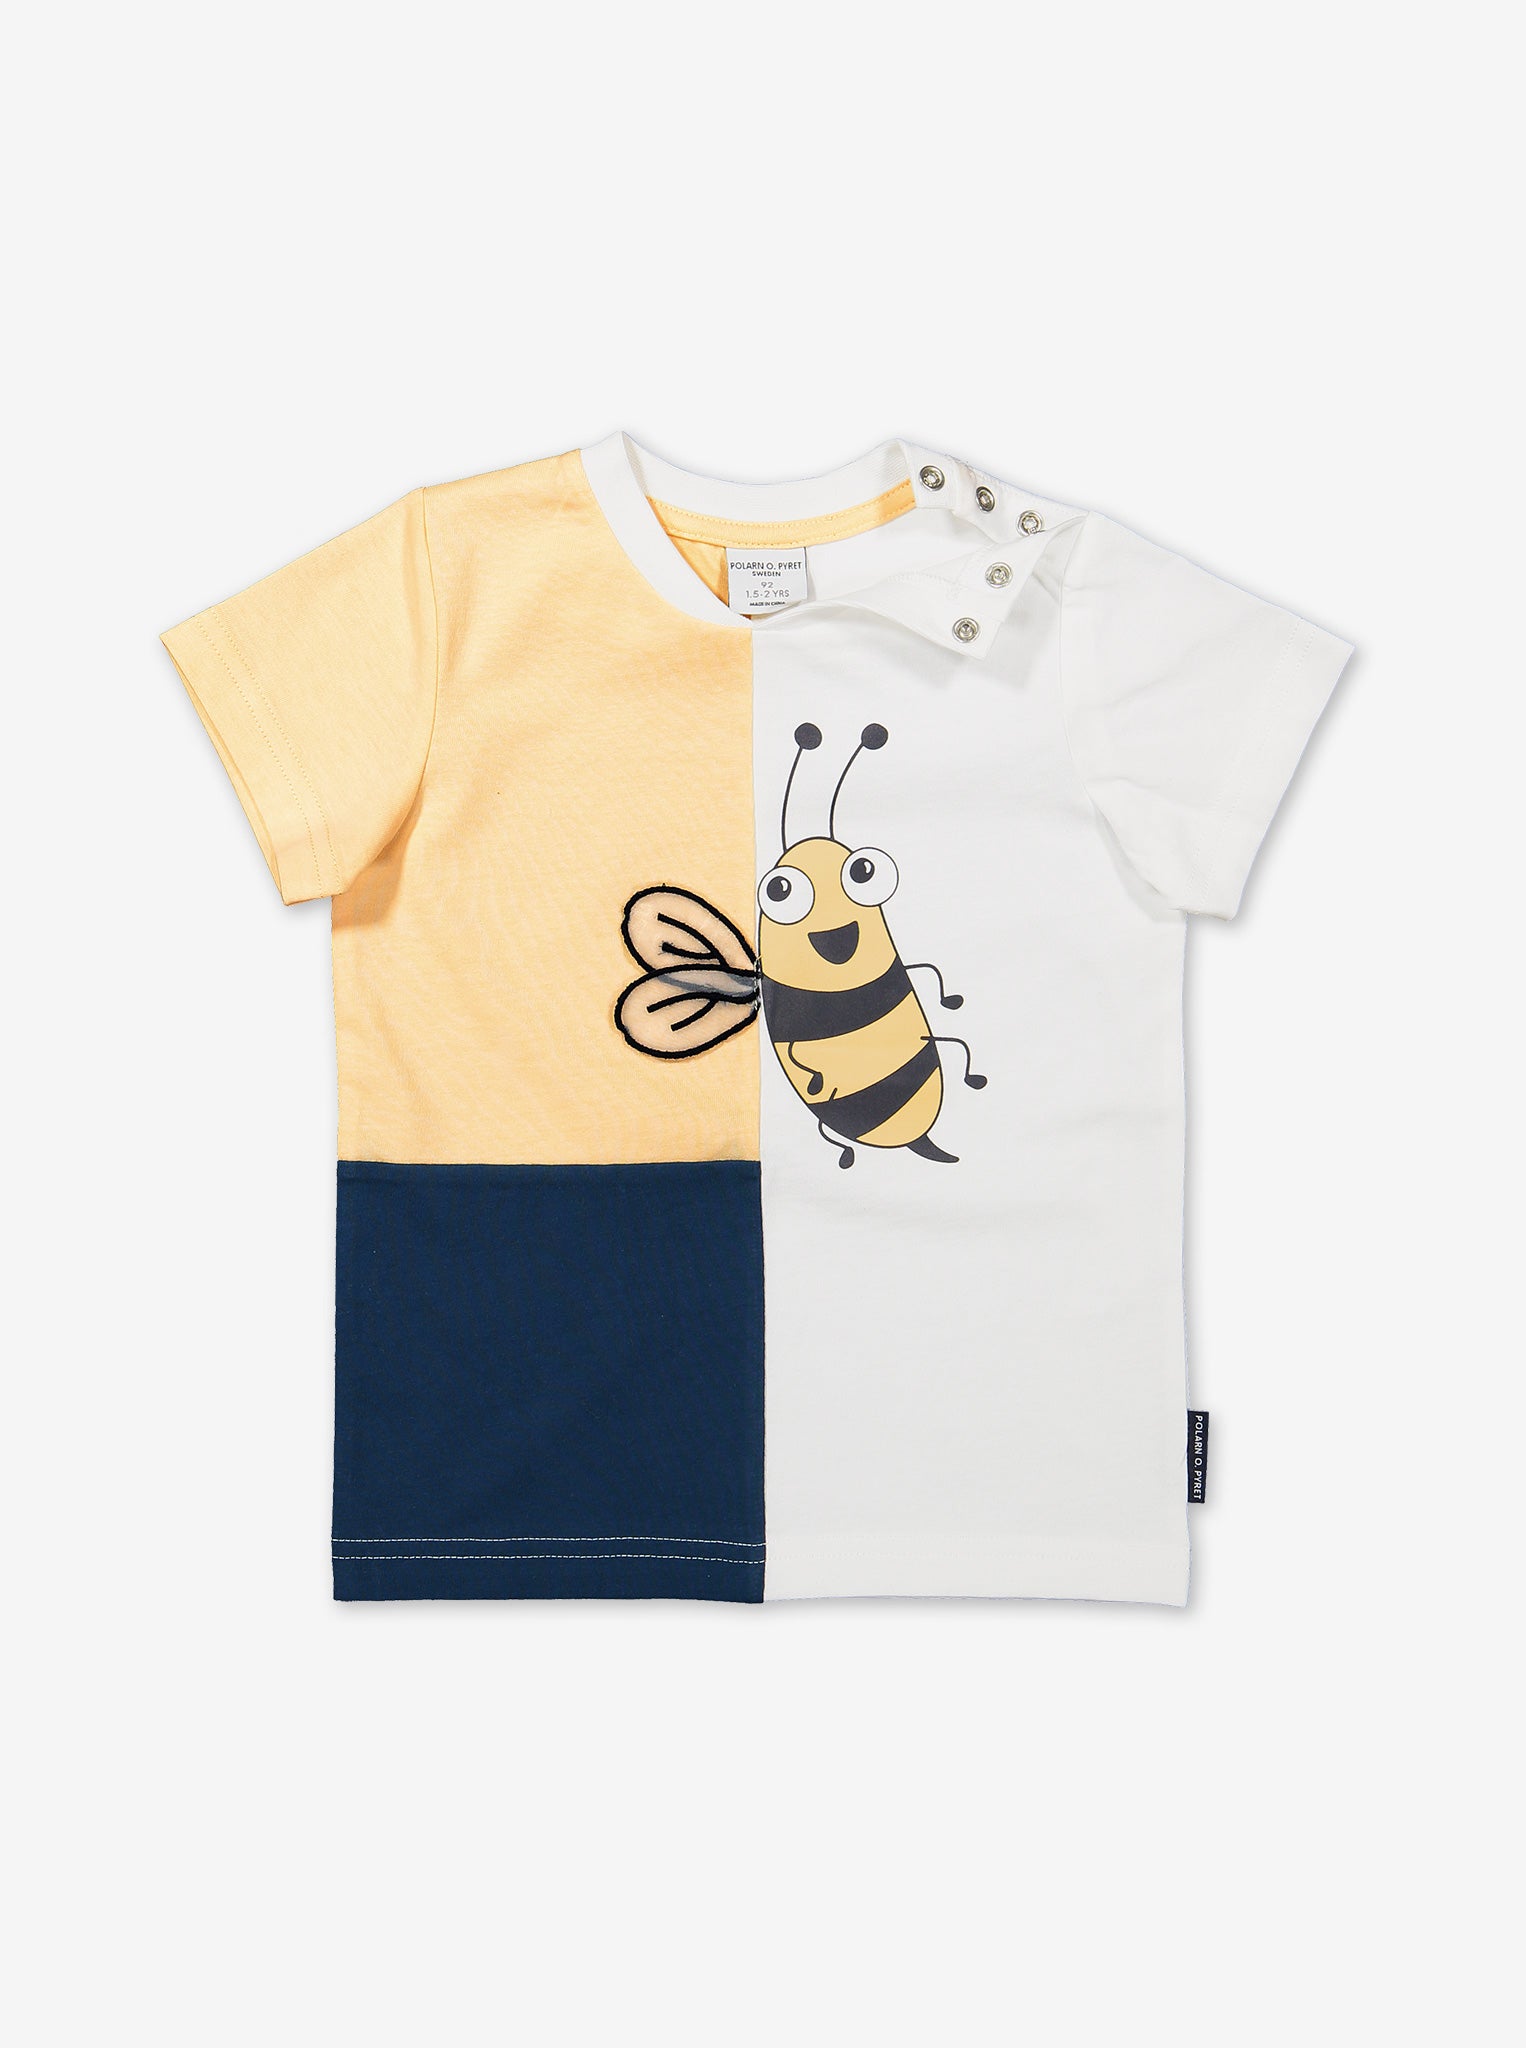 Busy Bee Kids T-Shirt